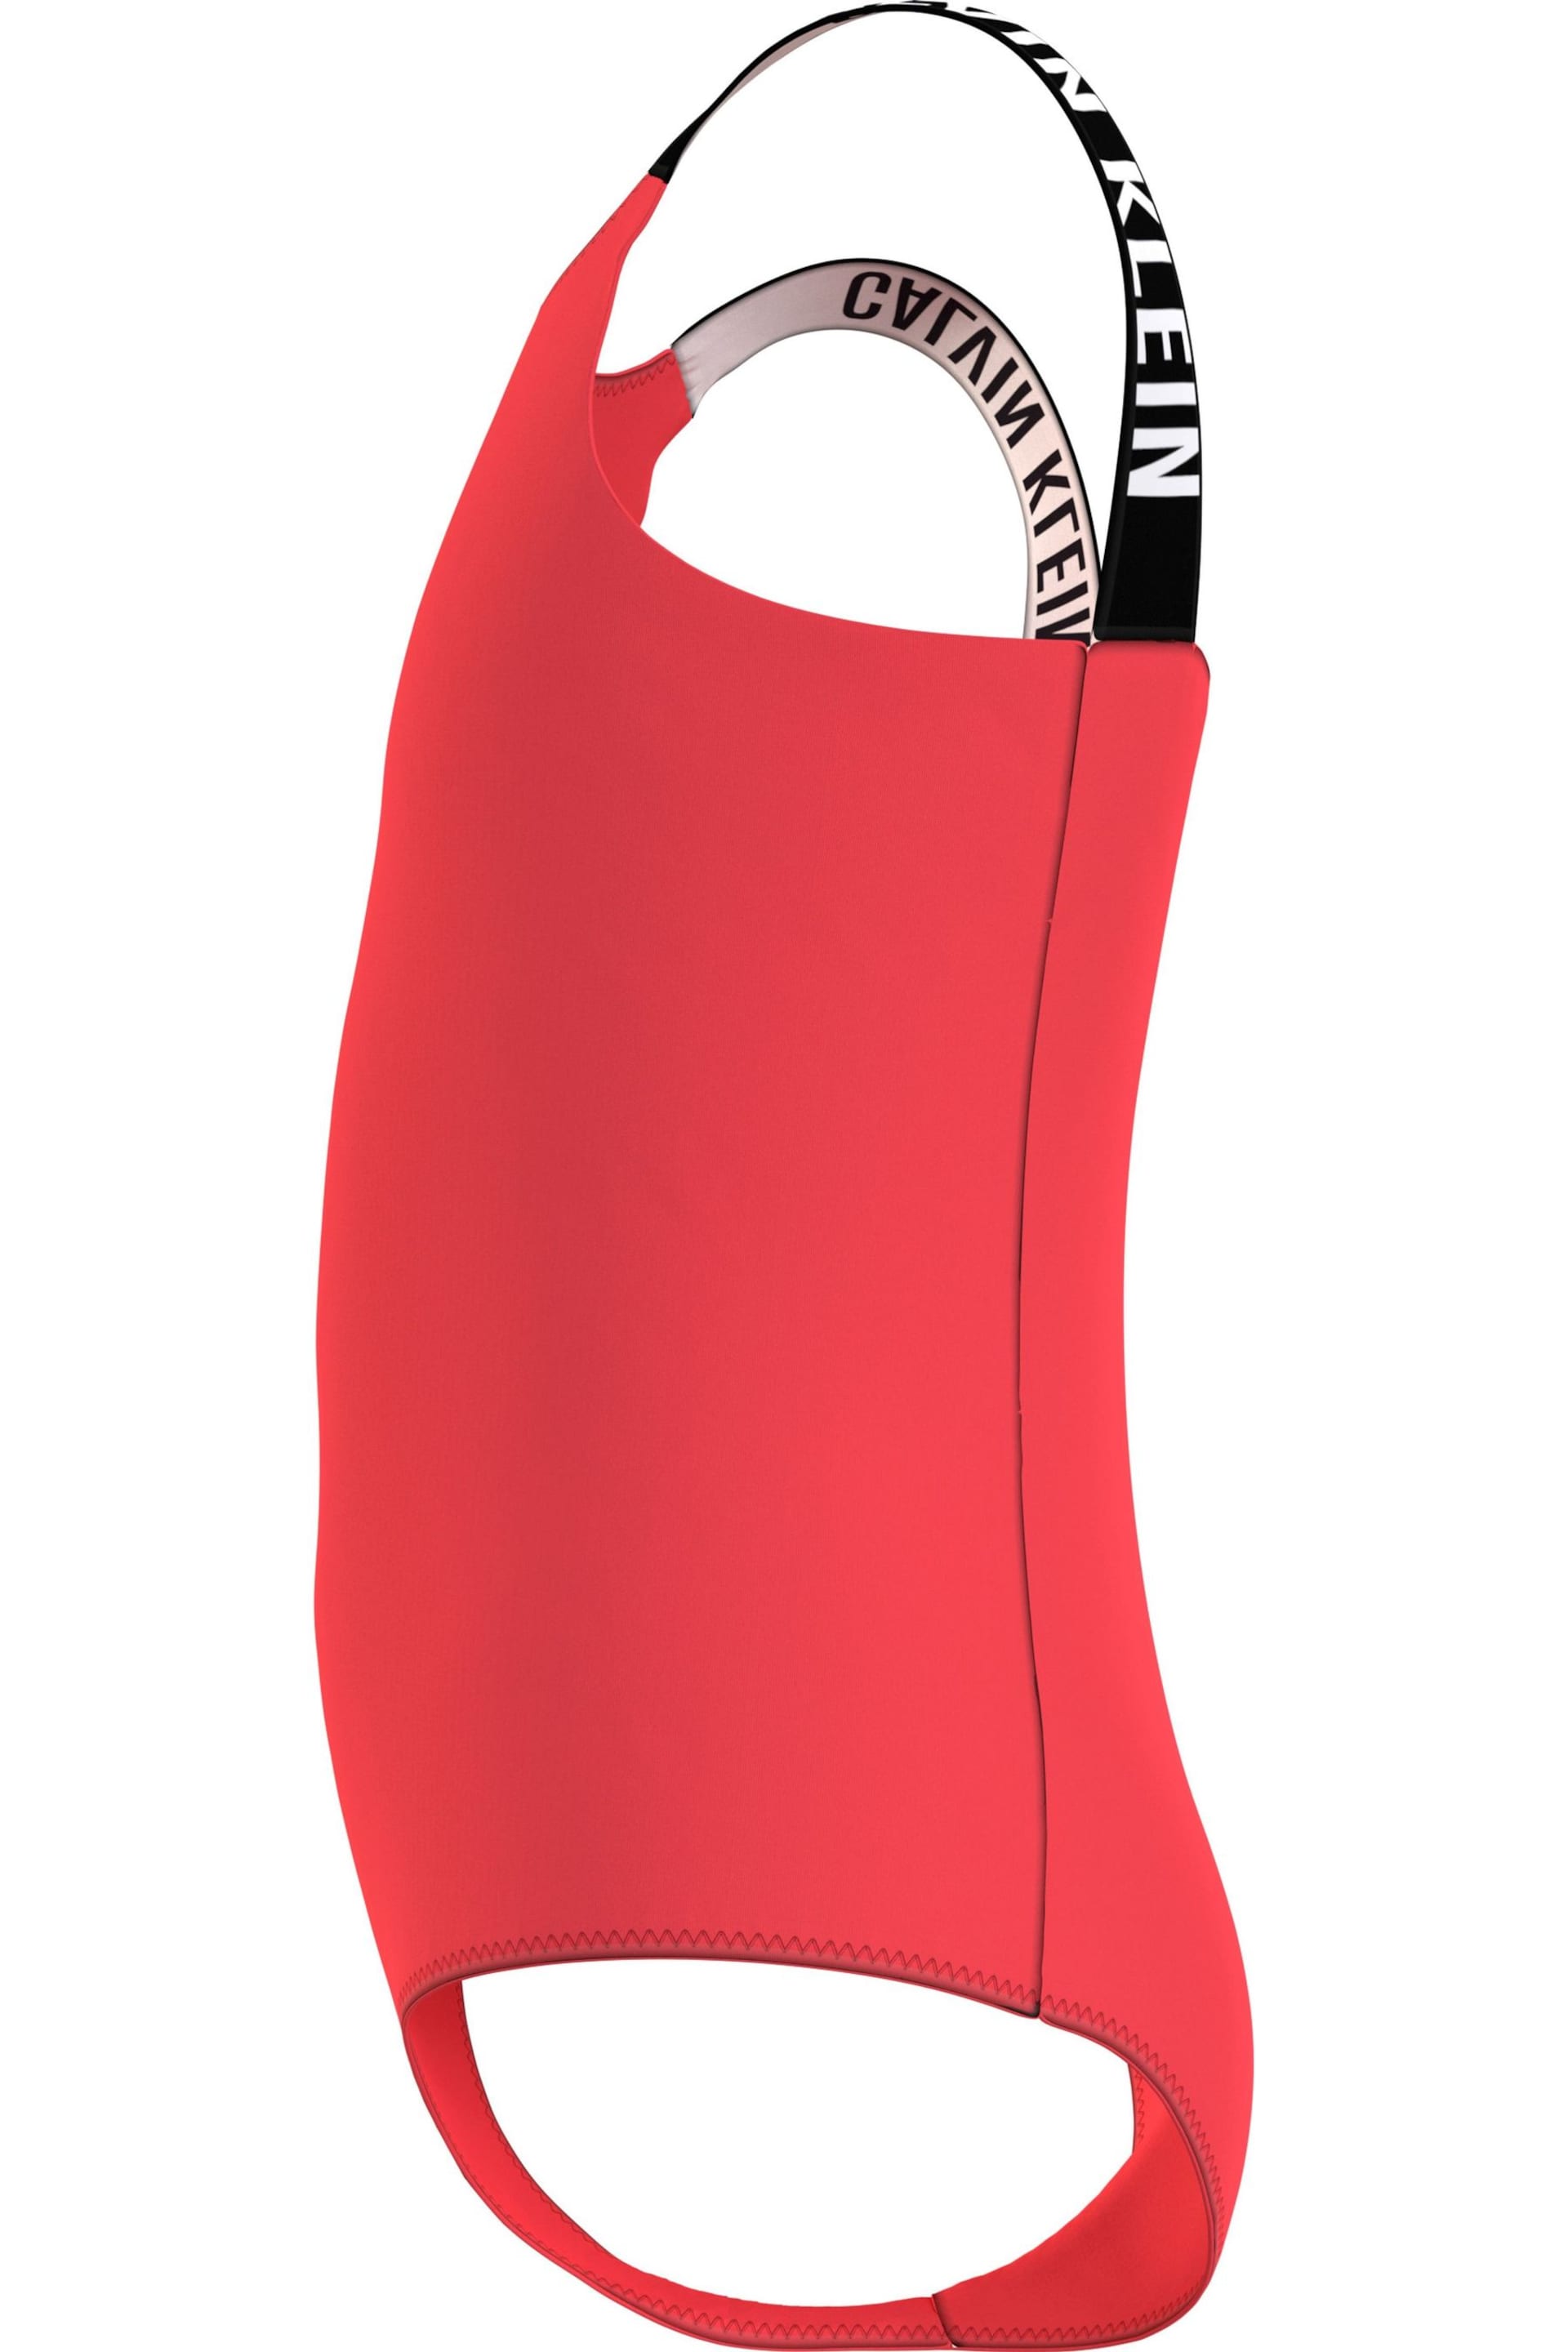 Calvin Klein Red Logo Sport Swimsuit - Image 3 of 5